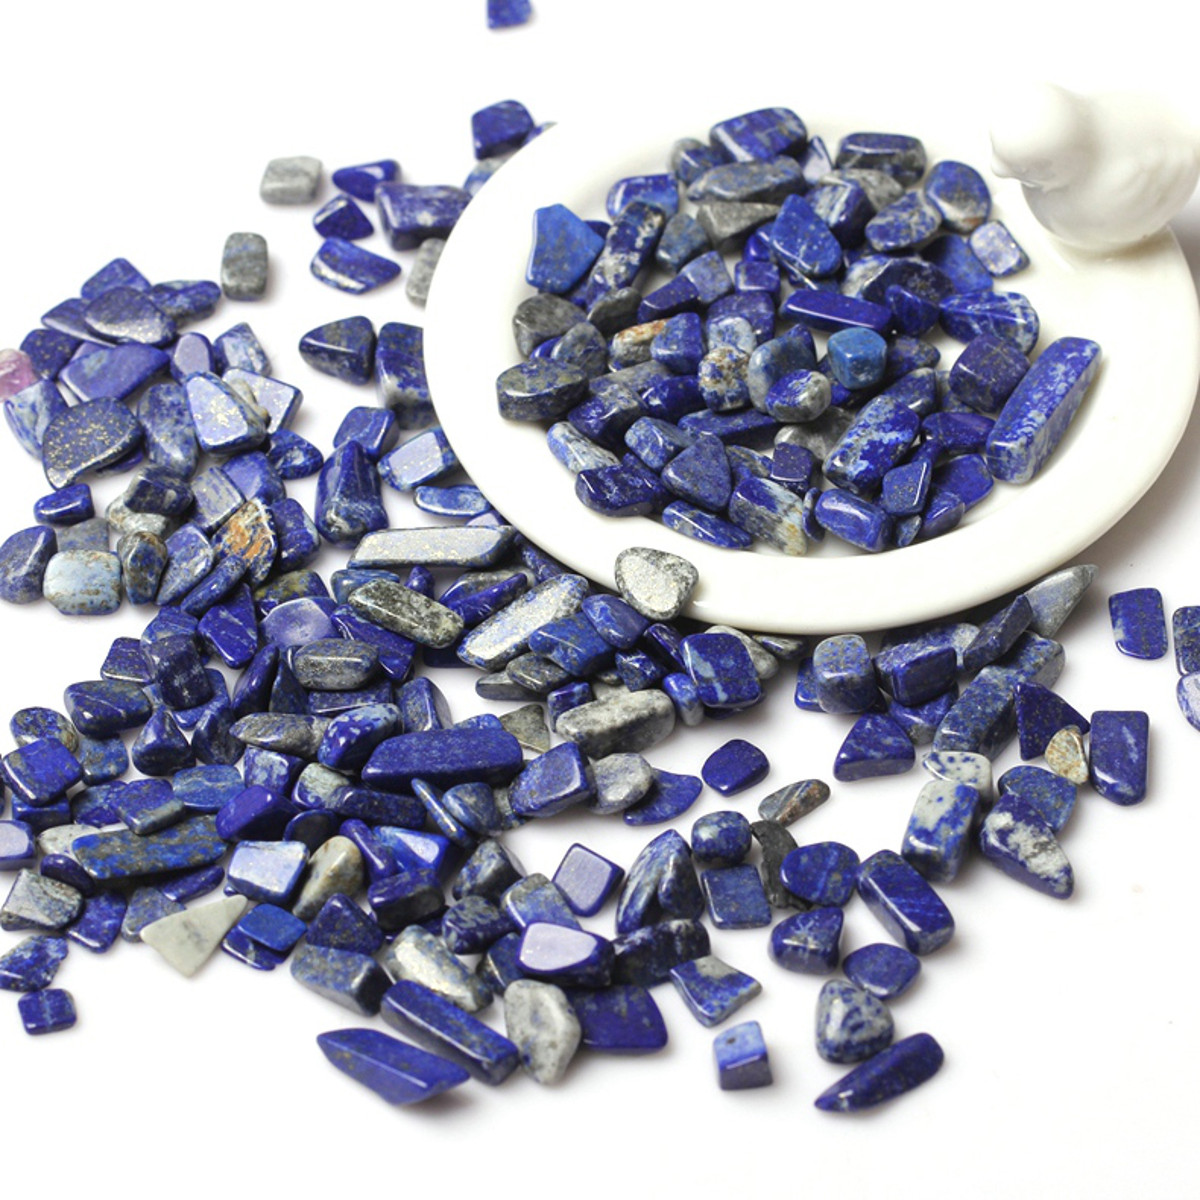 50g DIY Crystal Blue Lapis Lazuli Crystal Stone